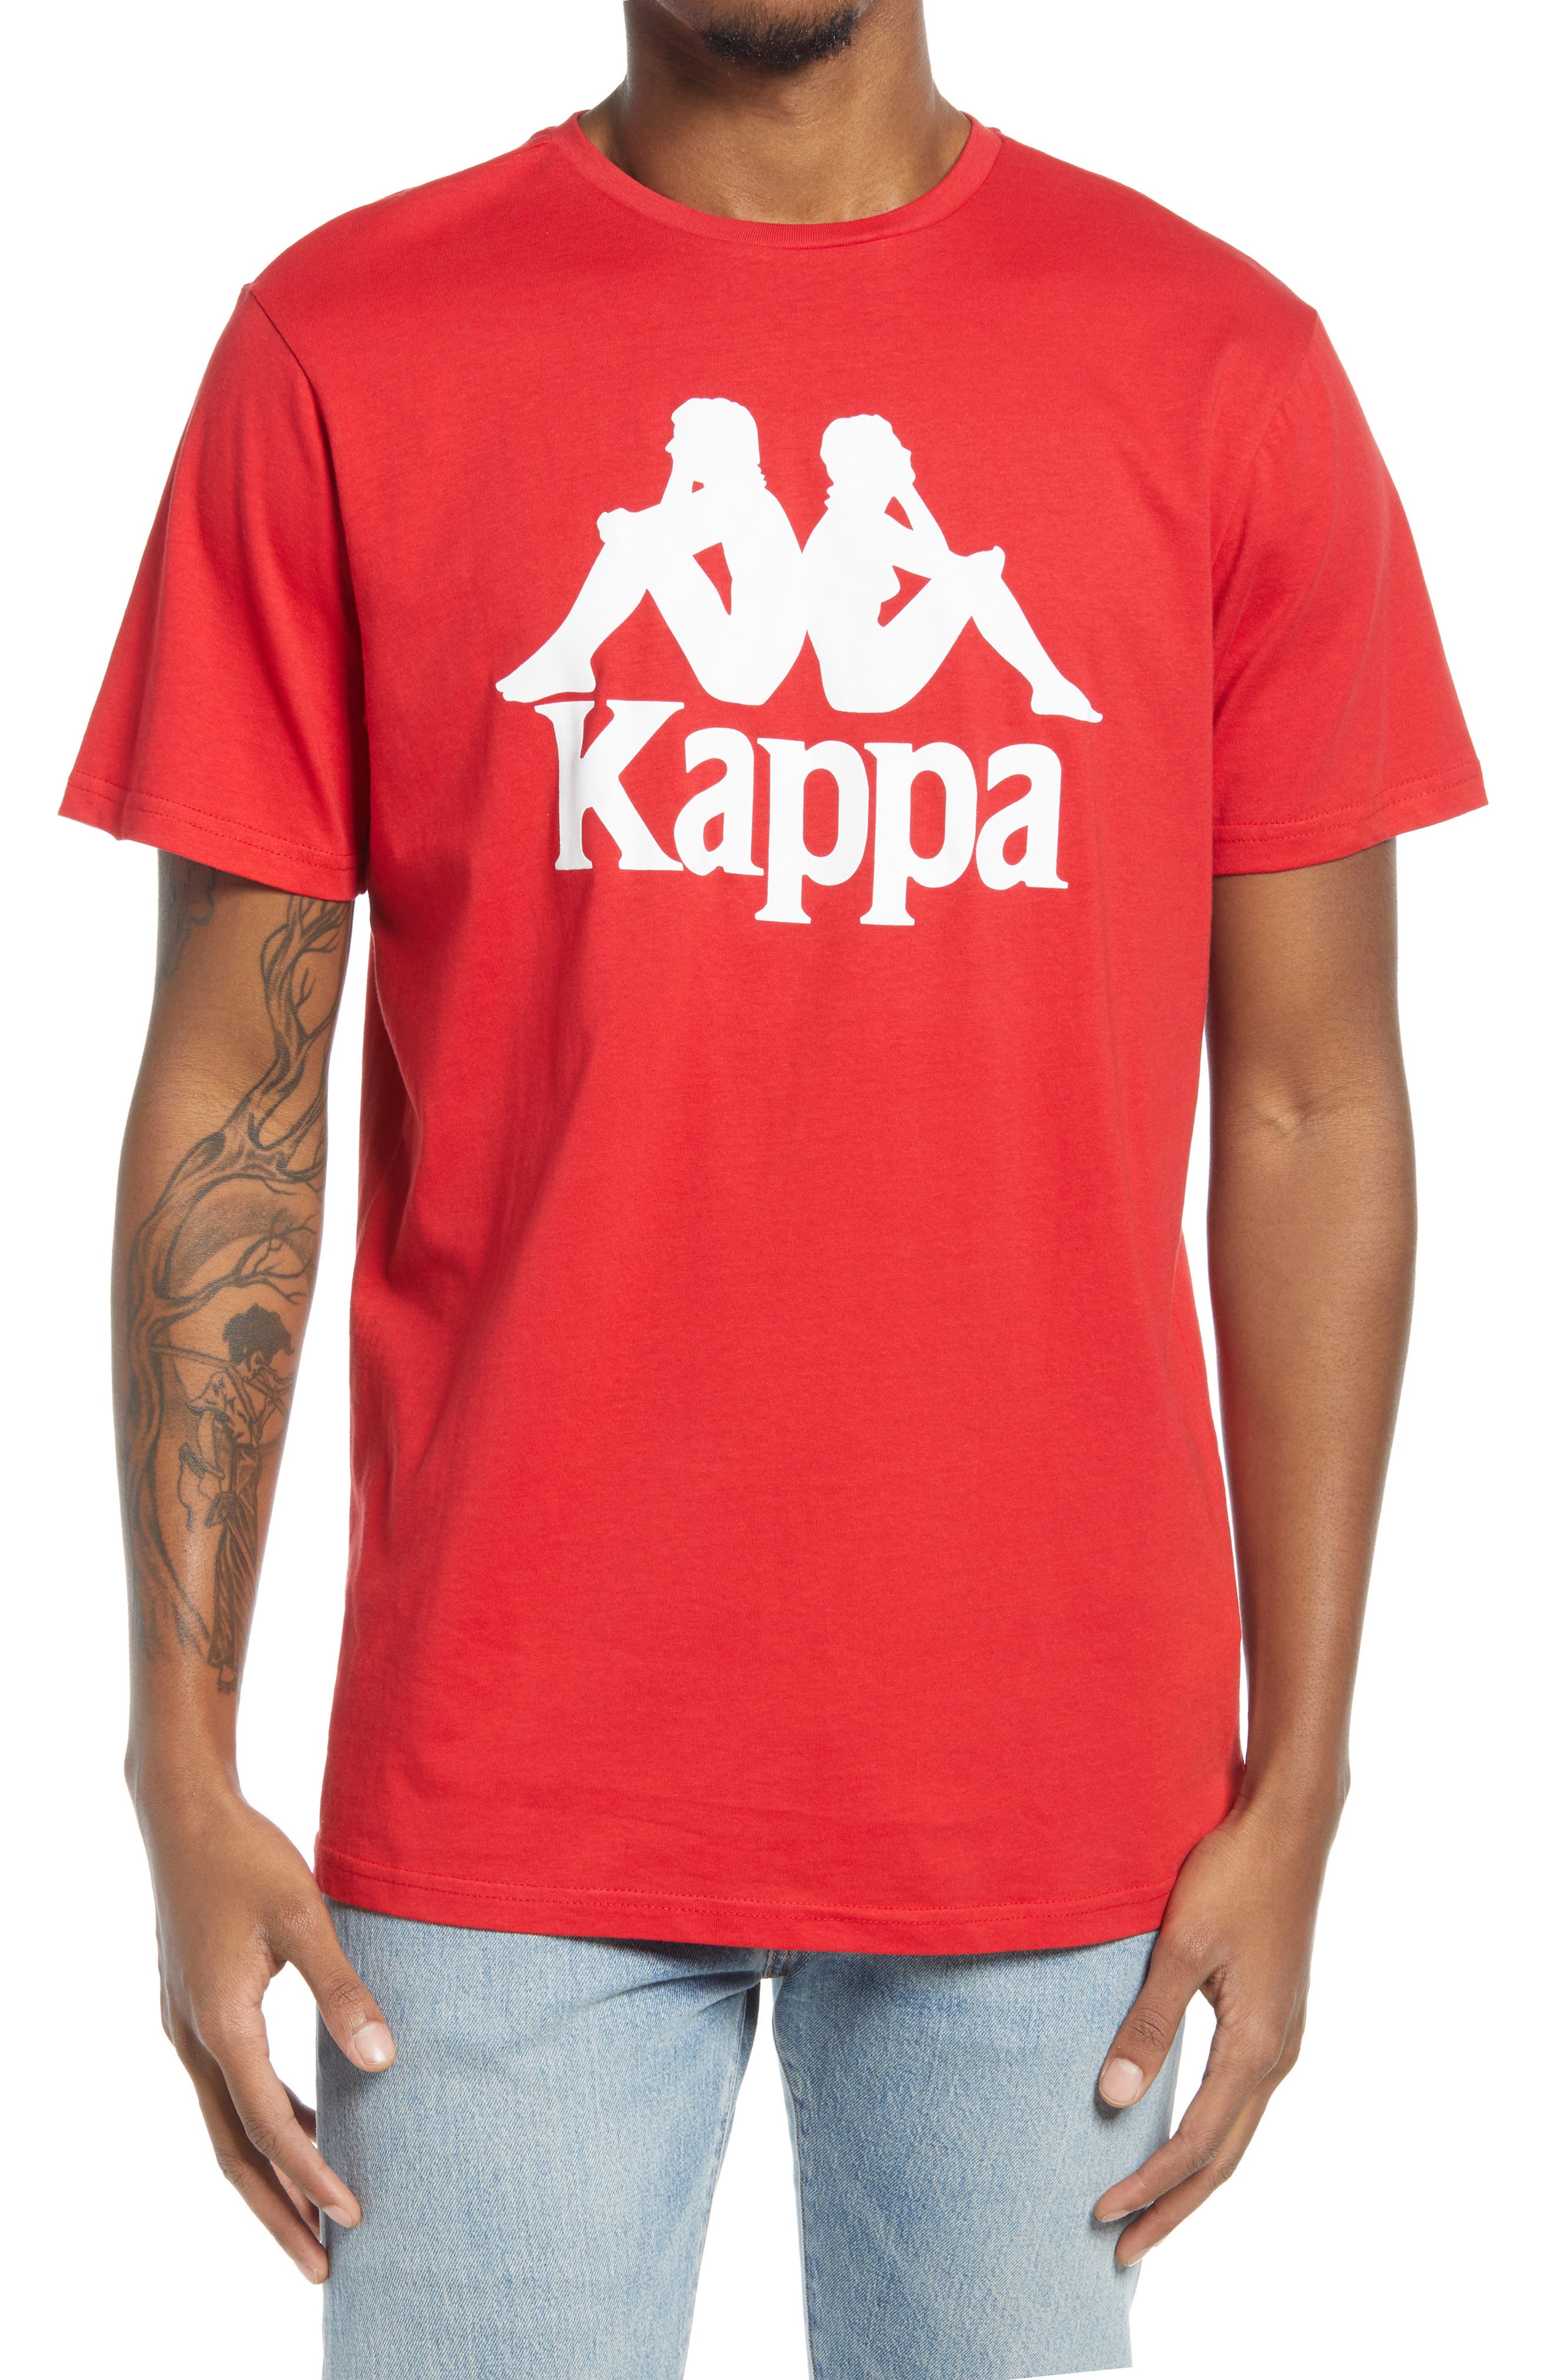 kappa red t shirt